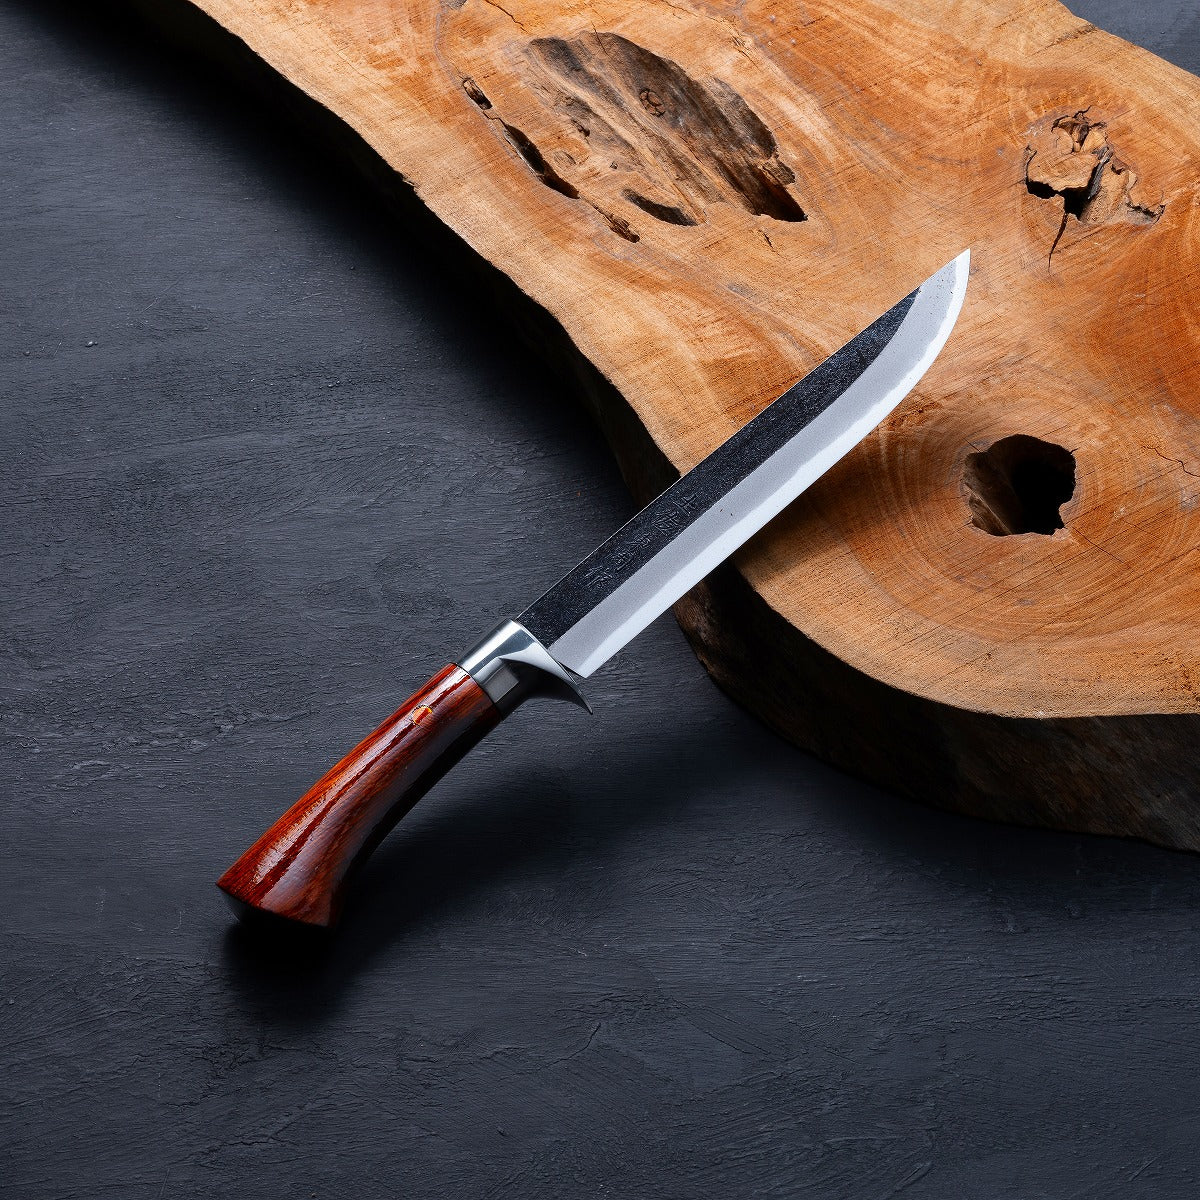 Buyer's guide: Choosing the best Japanese carbon steel knife